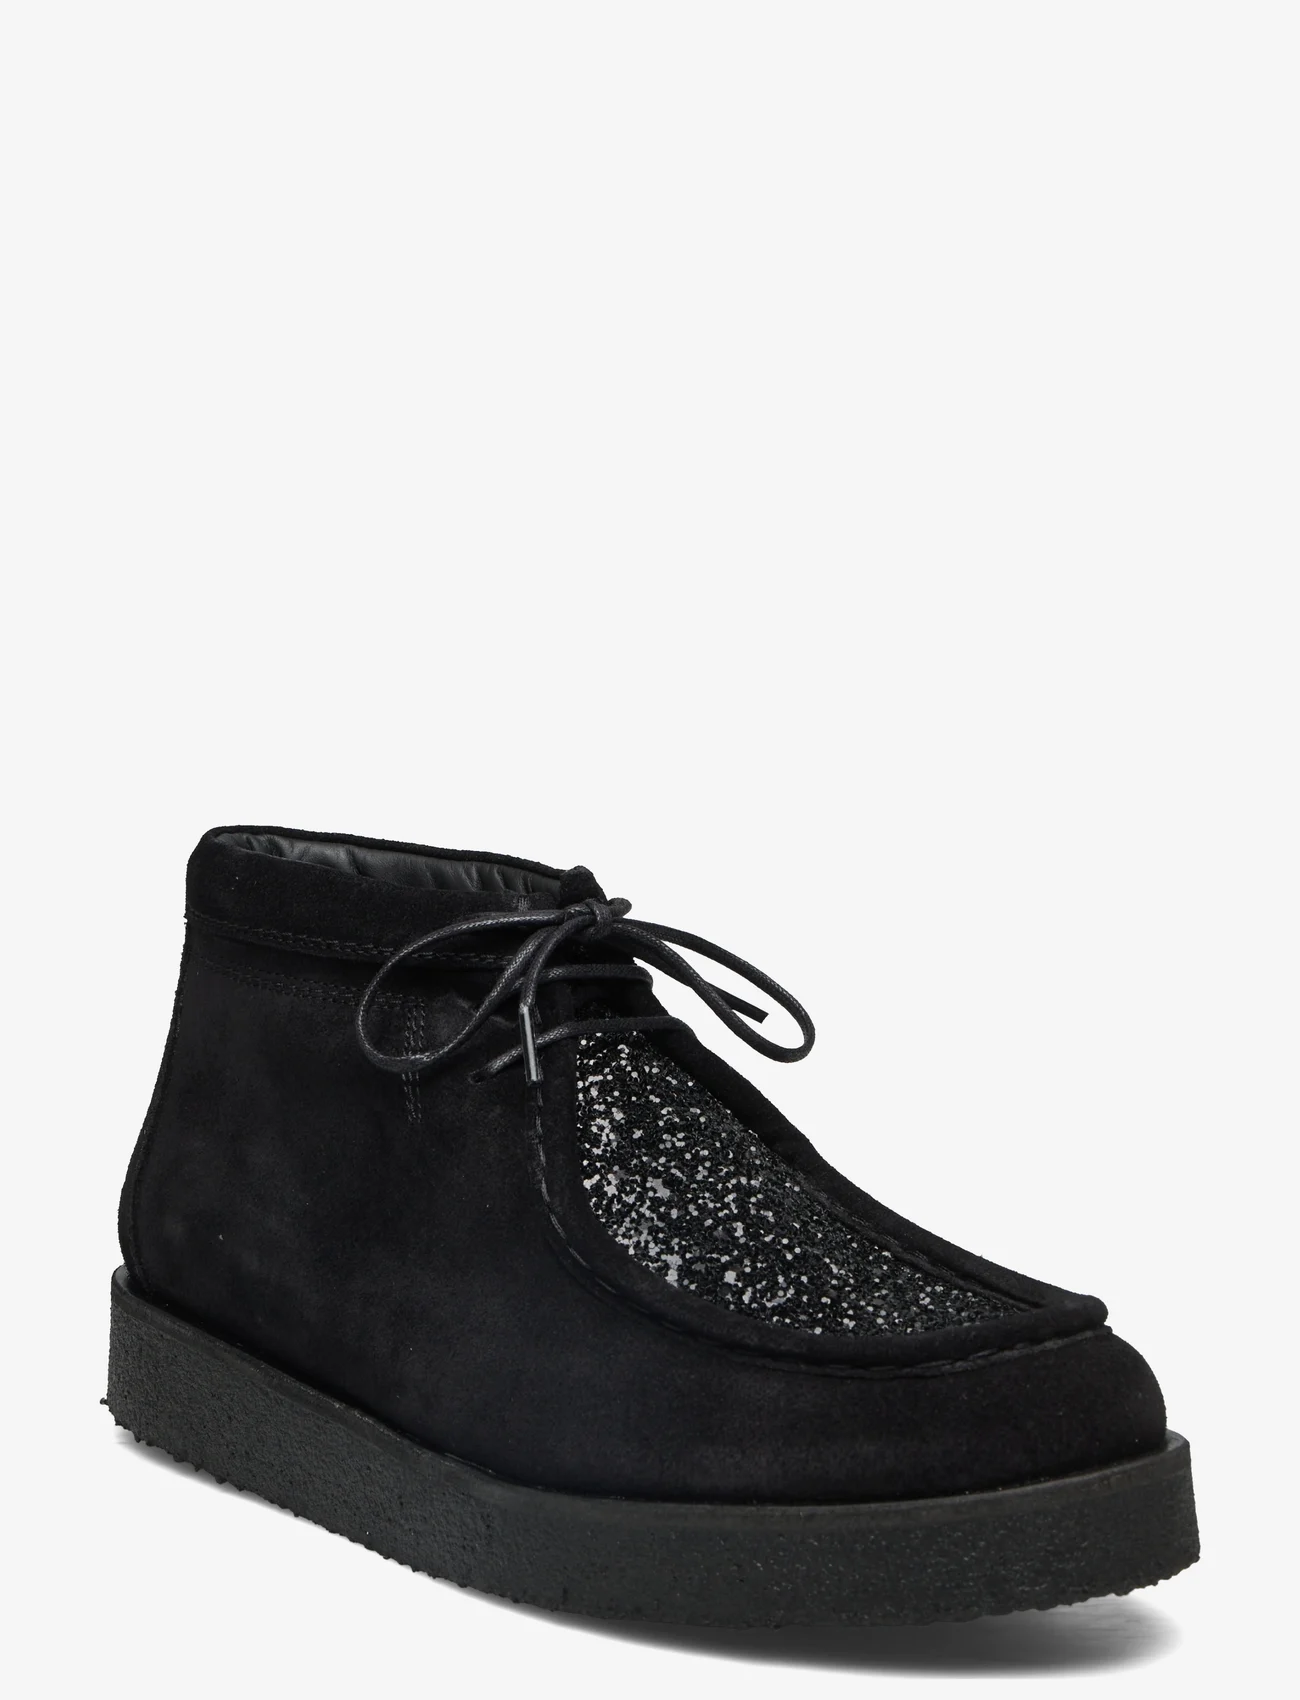 ANGULUS - Shoes - flat - with lace - flade sko - 1163/2486 black/black glitter - 0